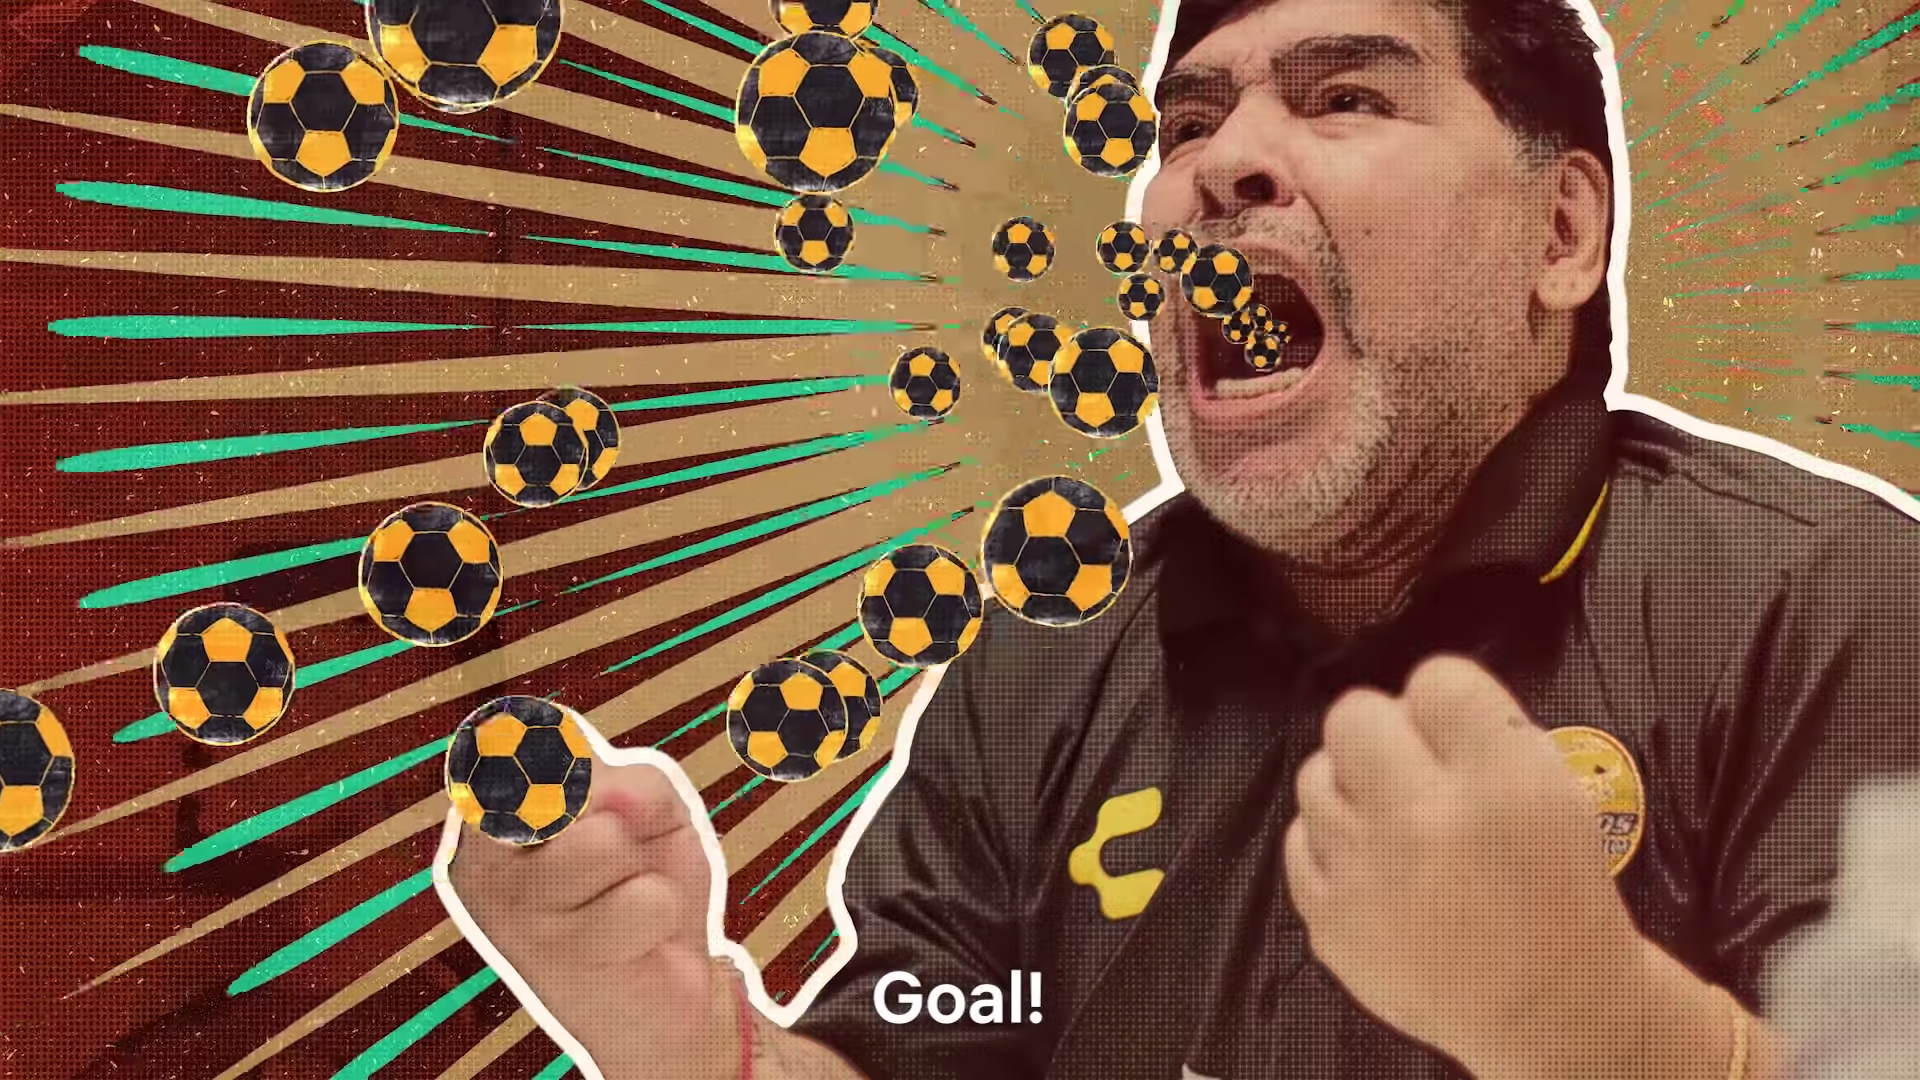 Maradona in Mexico Netflix Trailer, Netflix Sports Series, Netflix Documentary Series, Coming to Netflix in November 2019